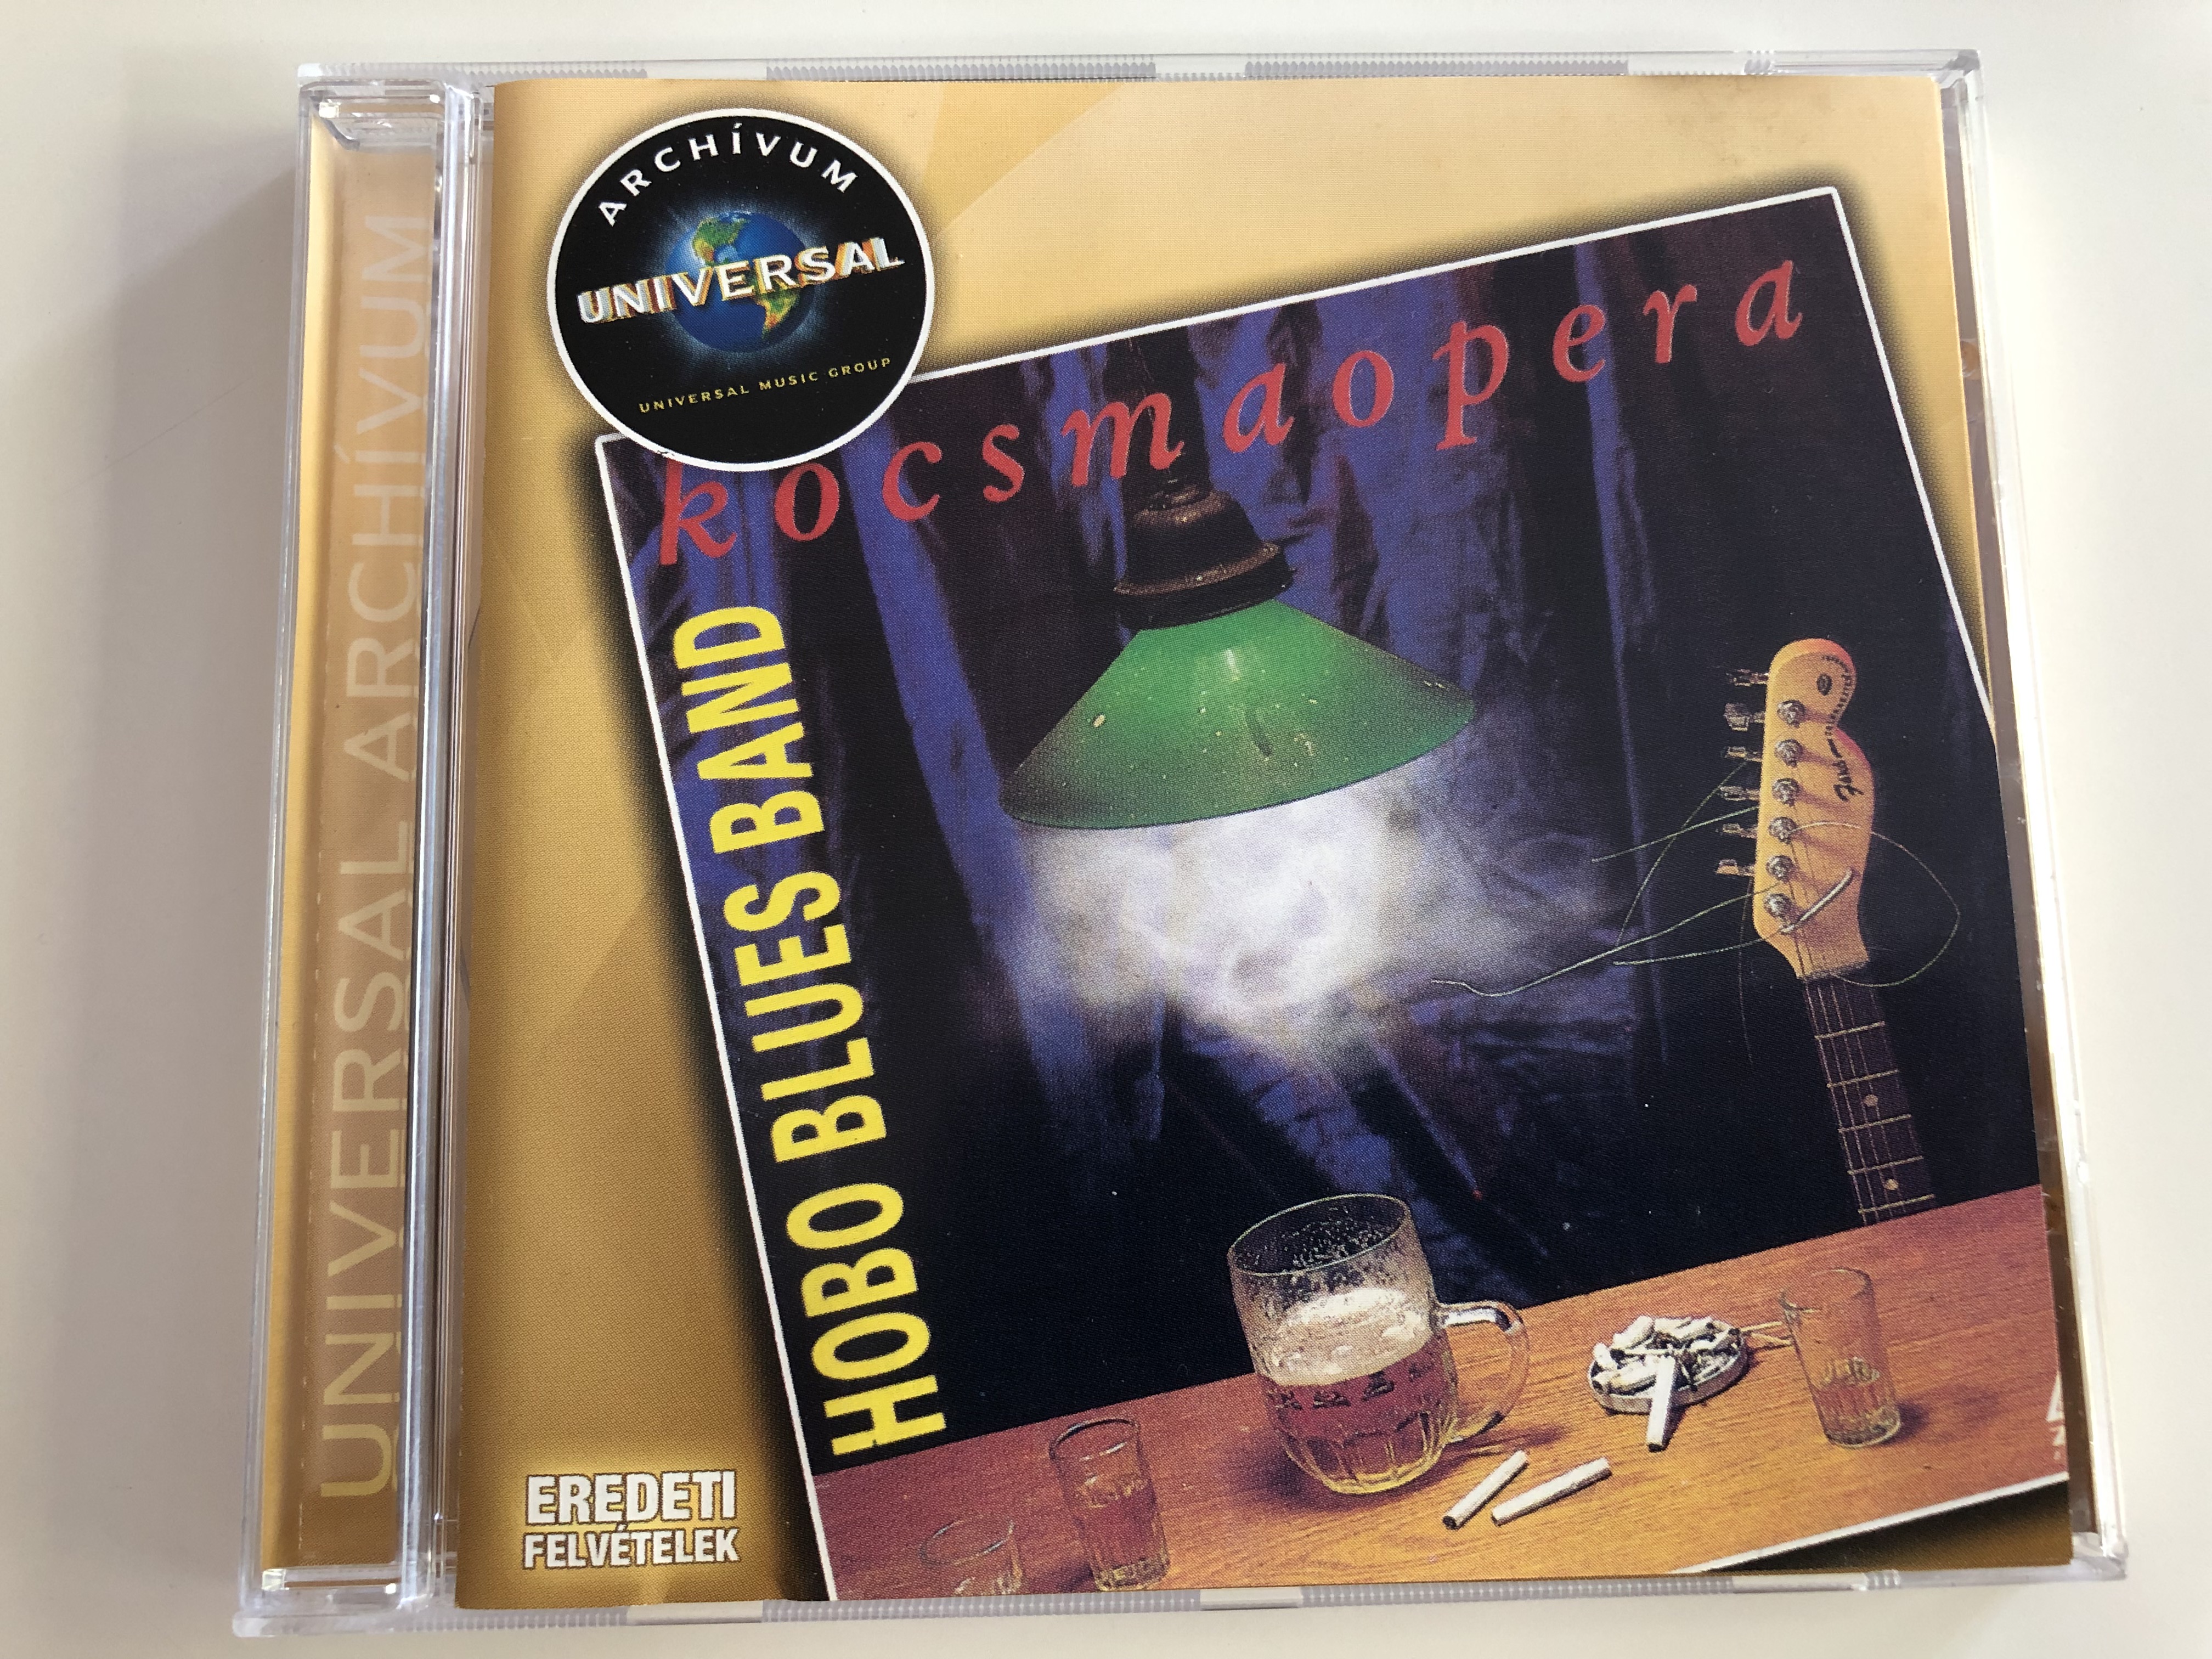 hobo-blues-band-kocsmaopera-eredeti-felv-telek-audio-cd-2008-universal-music-1-.jpg